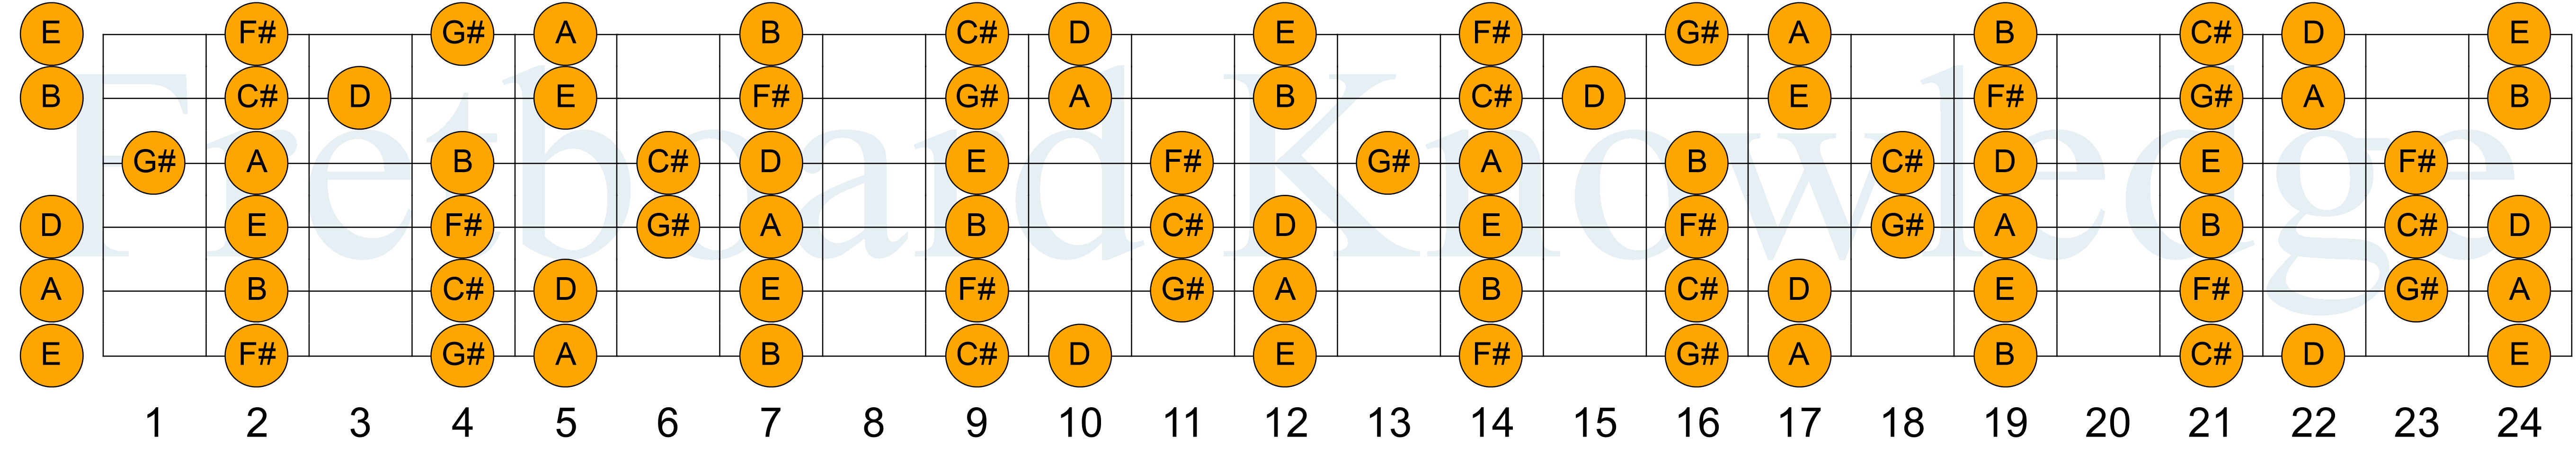 The A Major Scale Guitar Fretboard Diagram